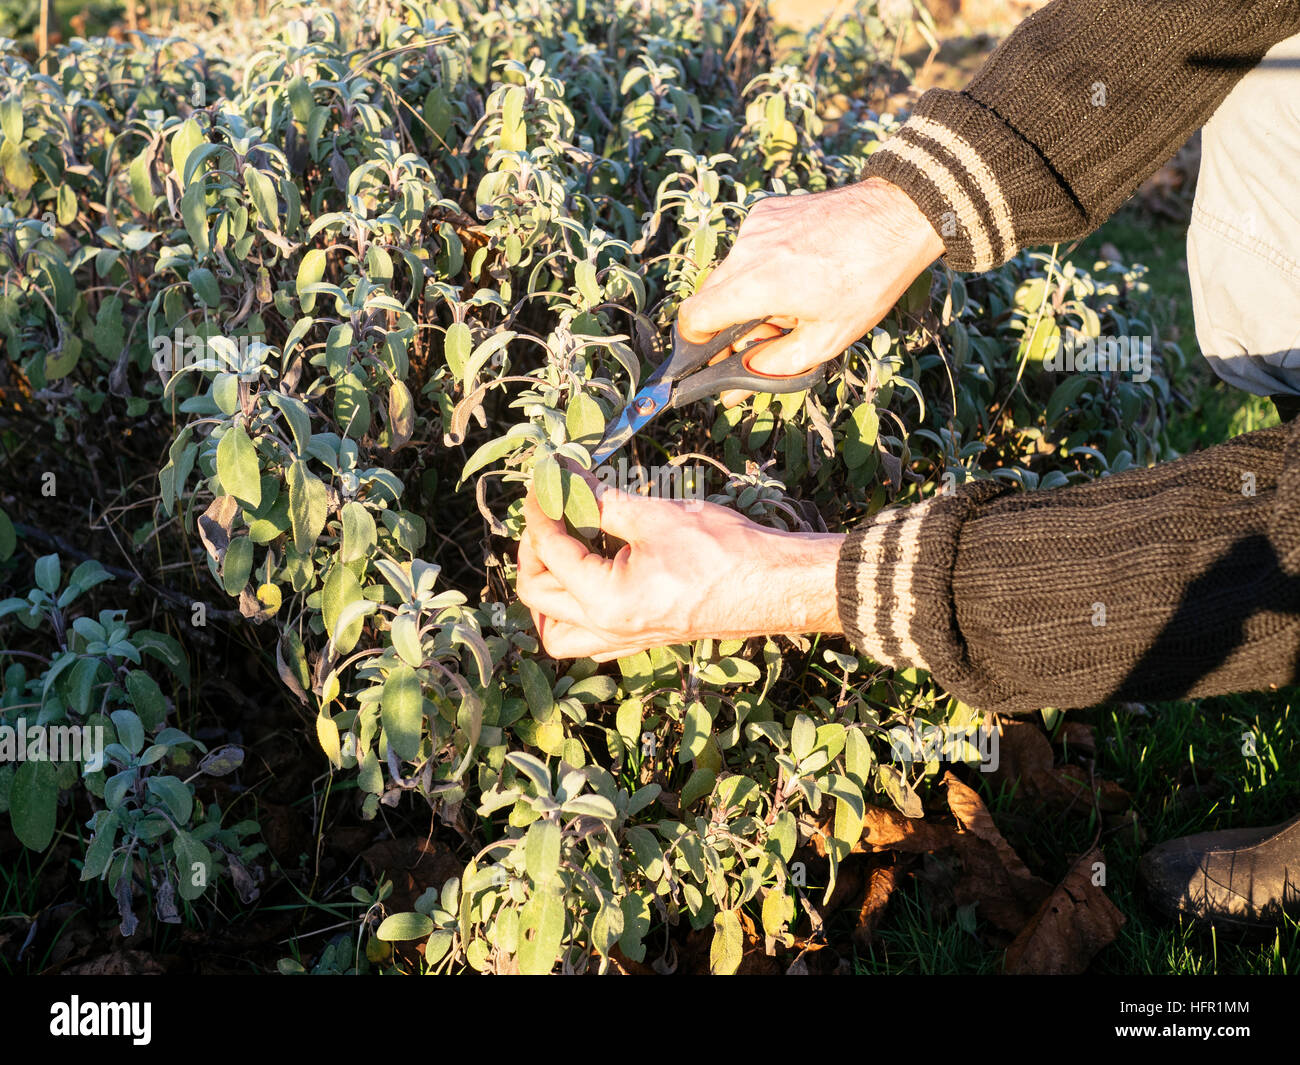 Gardener harvesting sage (Salvia officinalis)  leaves in a herb garden to make fresh sage tea.. Stock Photo